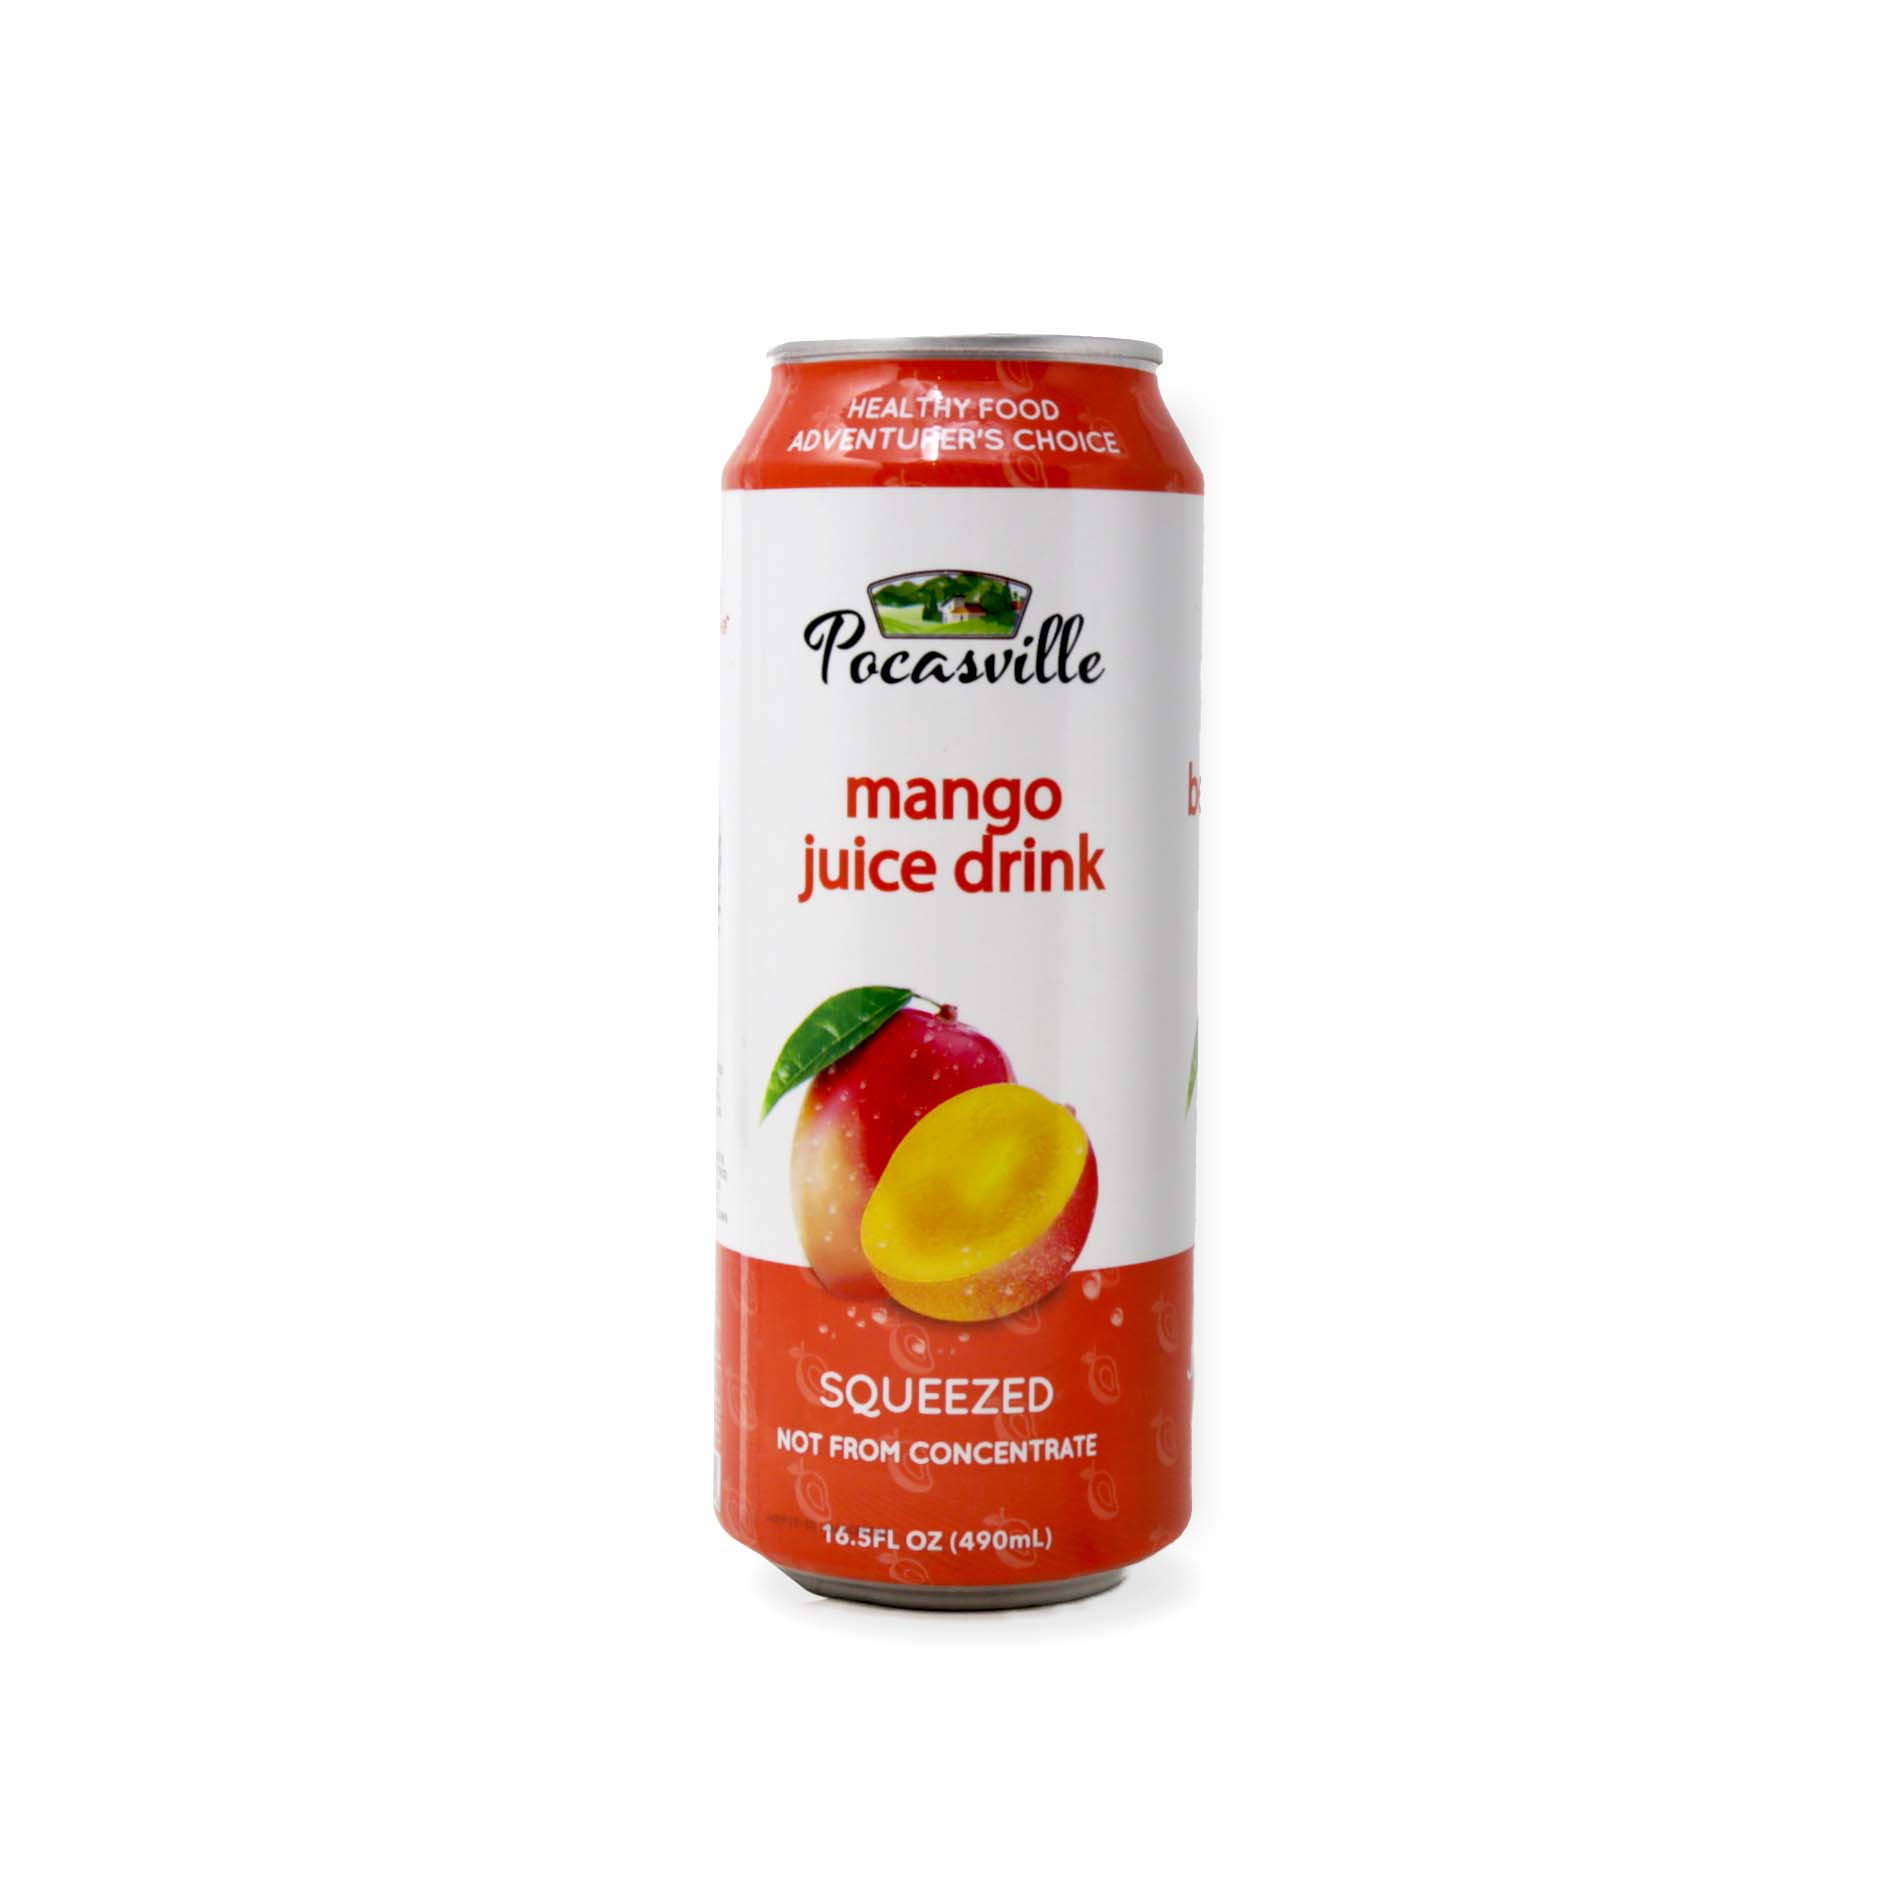 Pocasville Mango Juice Drink - 16.5 Fluid Ounces - Hackensack Market - Delivered by Mercato